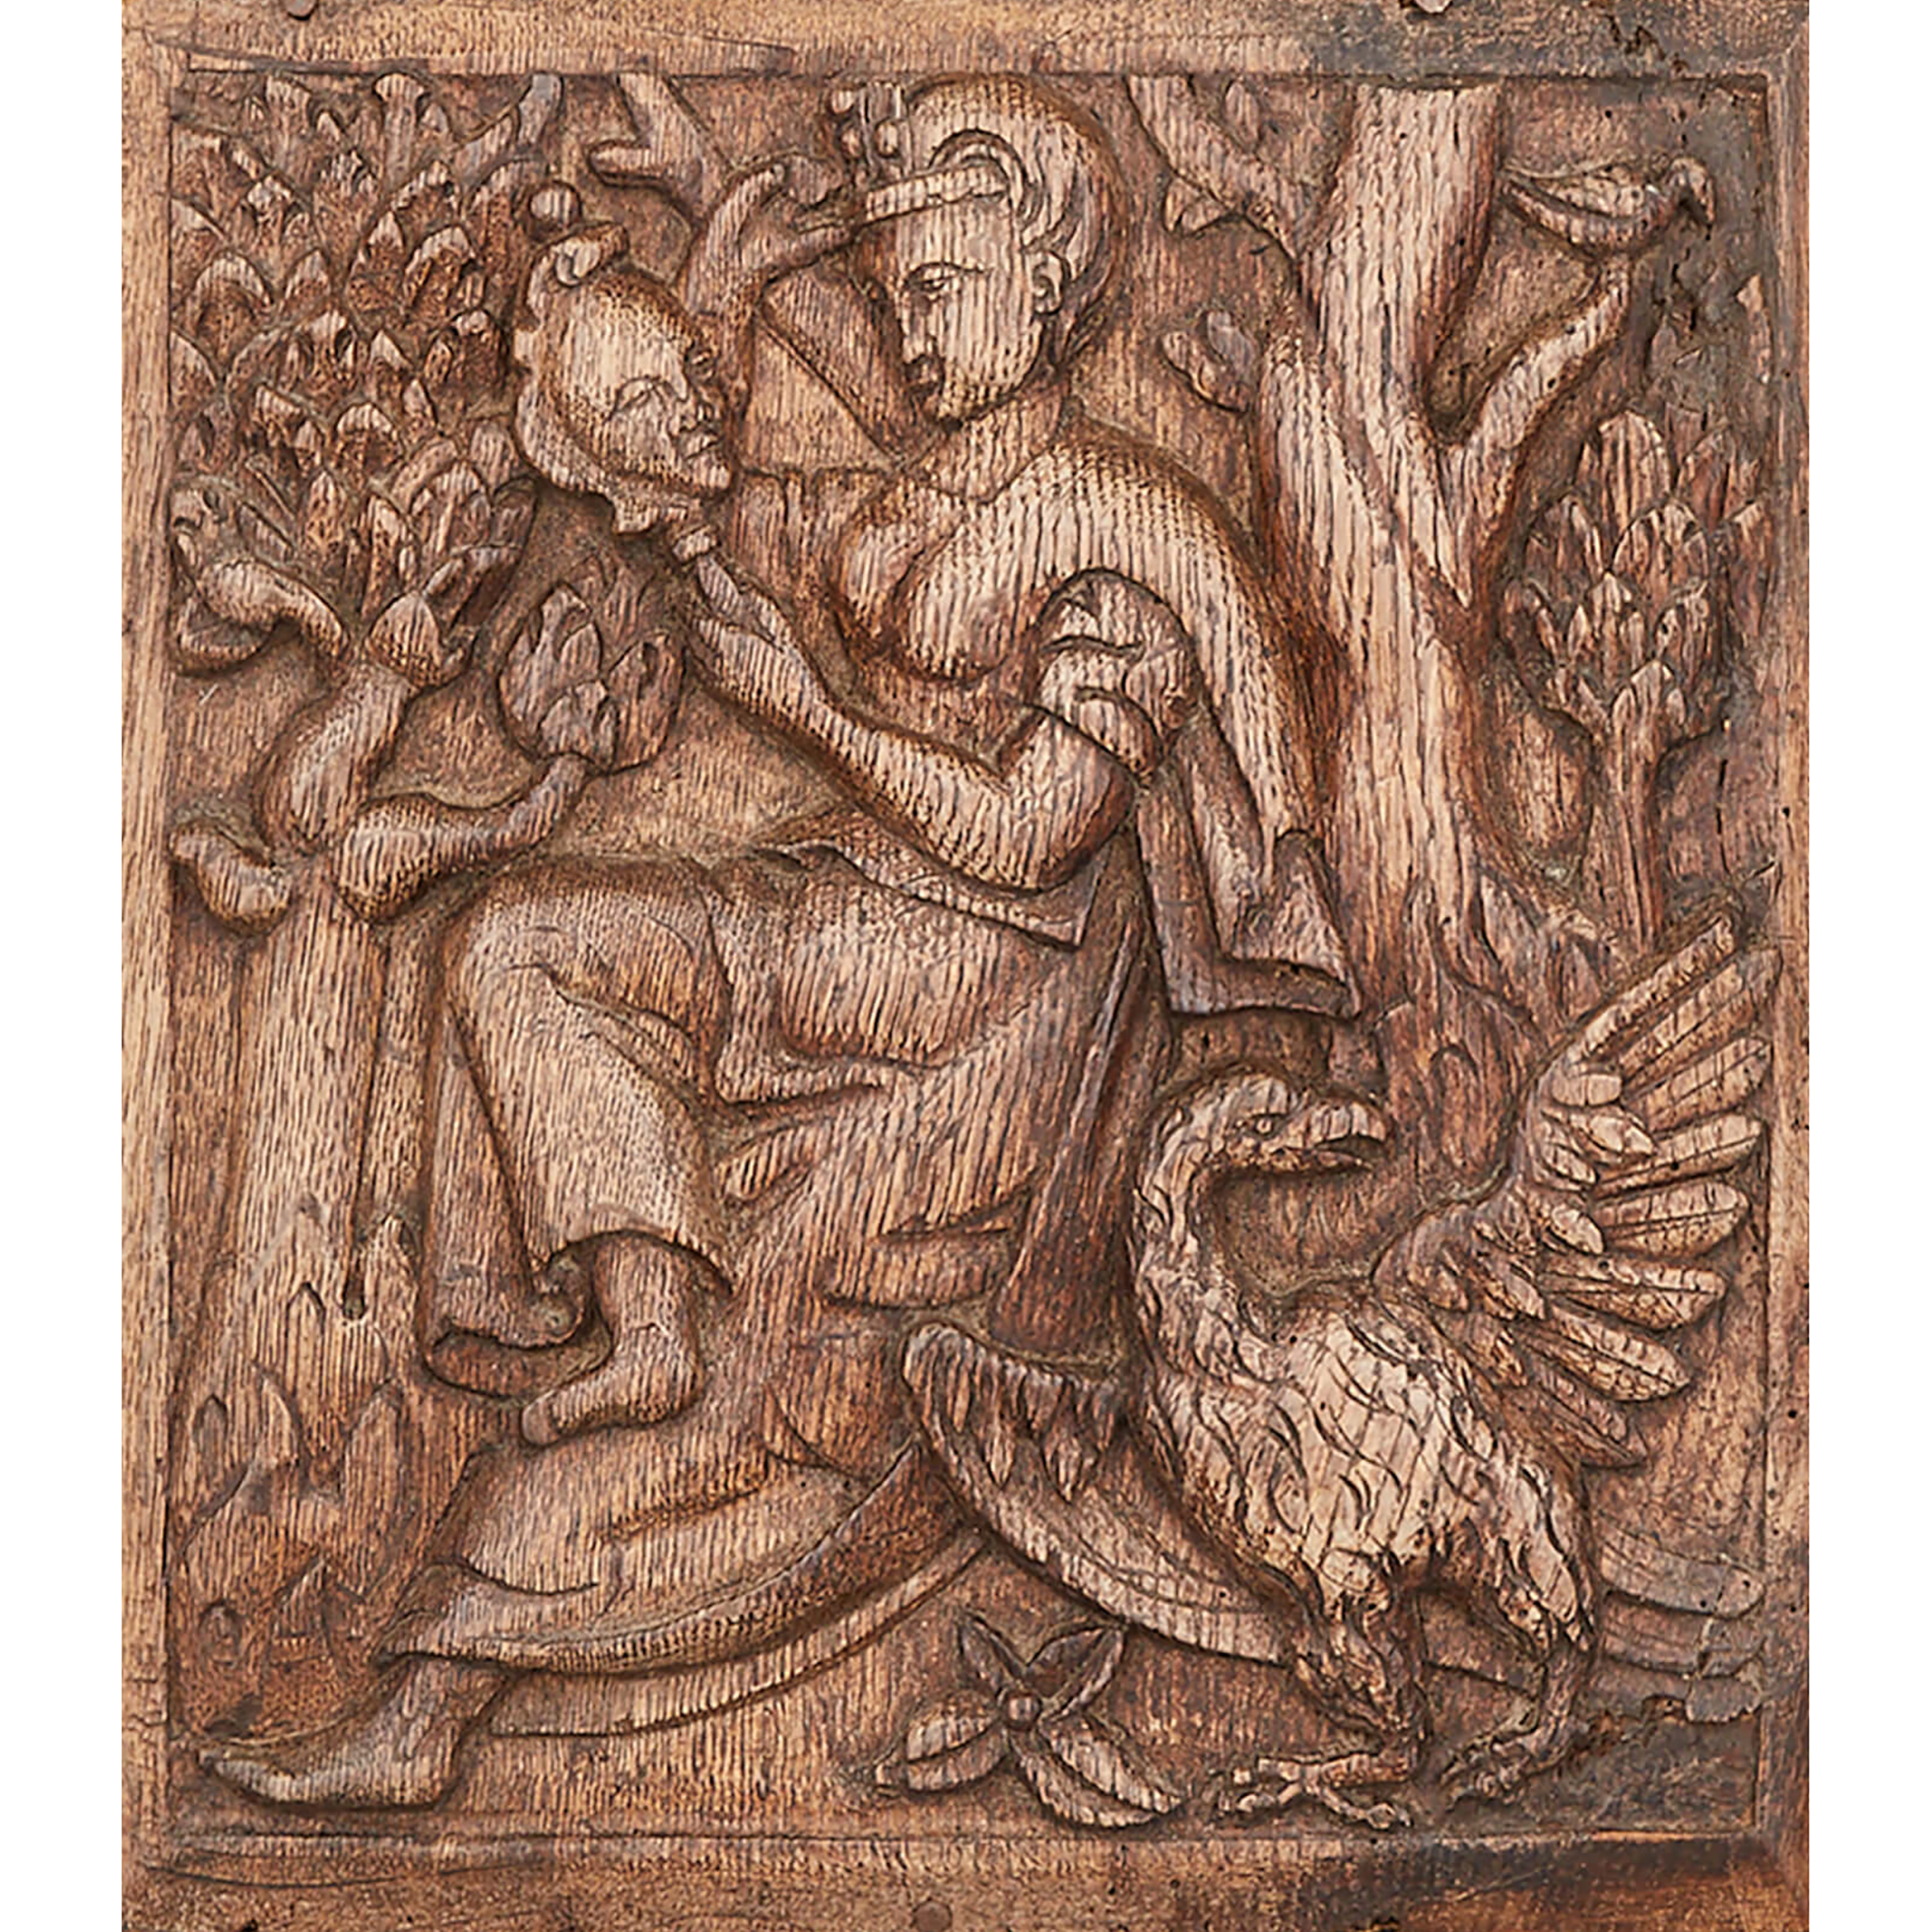 Flemish Allegorical Relief Carved Oak Figural Panel, 16th century